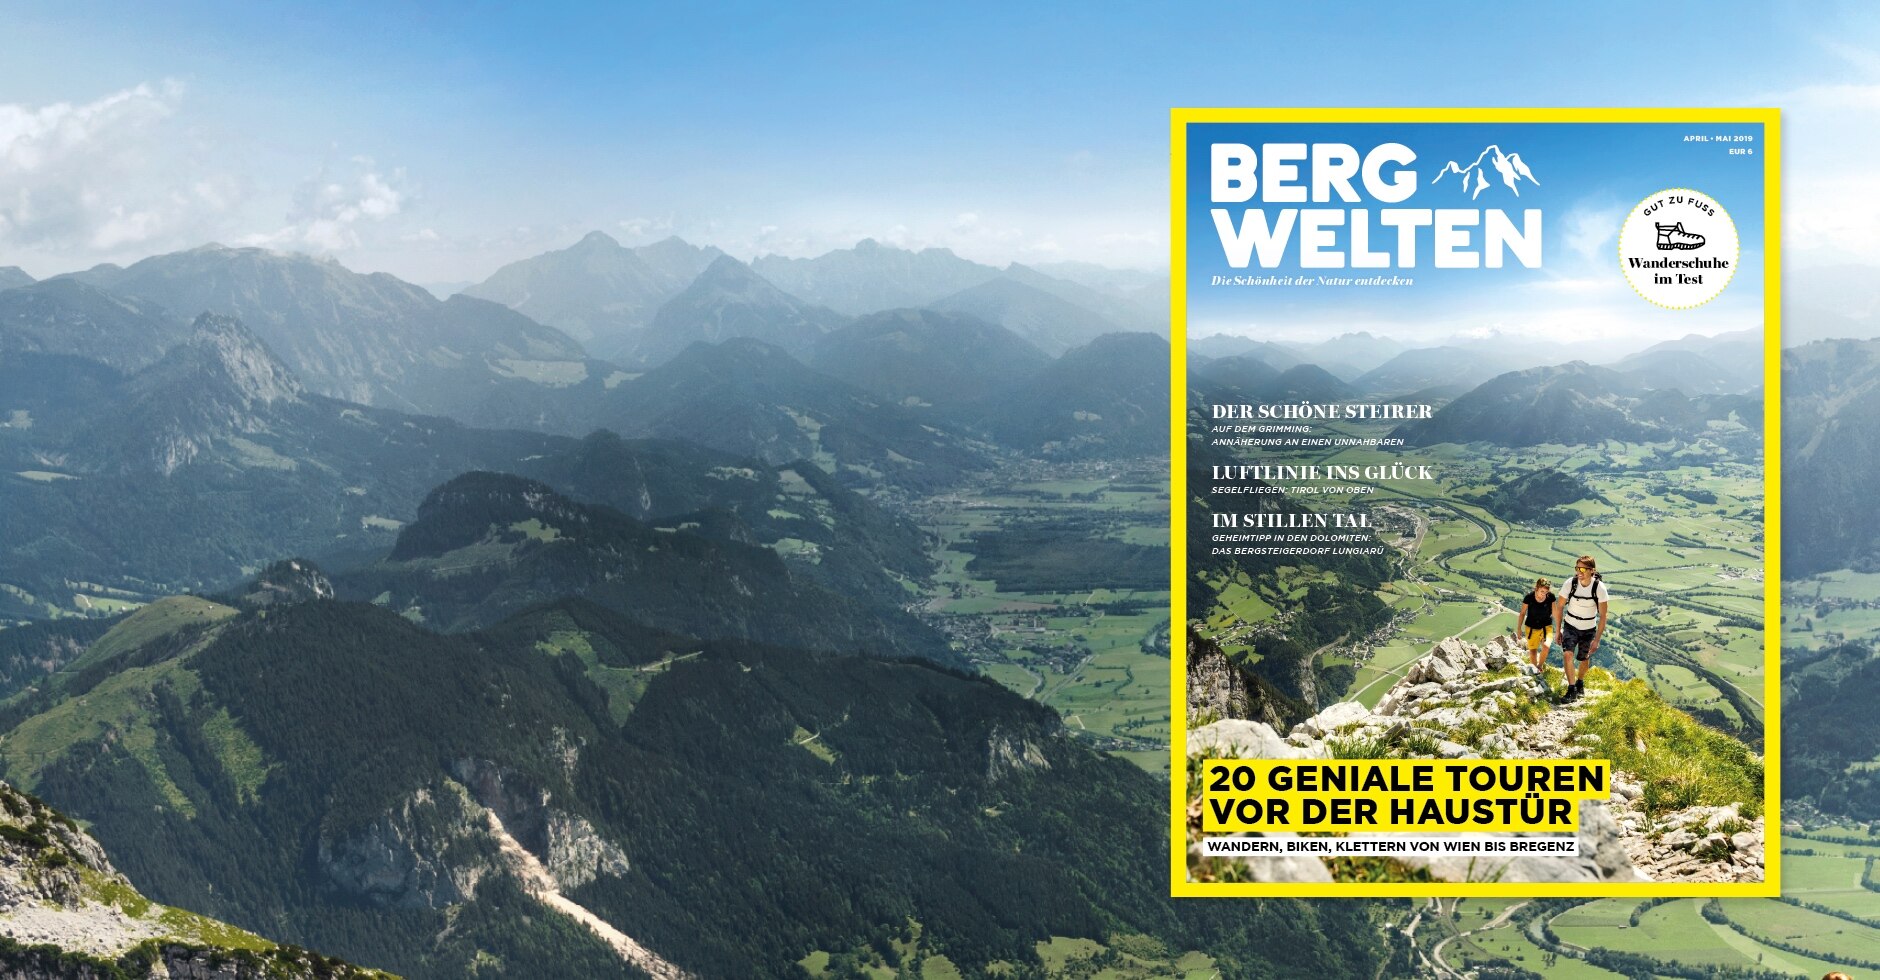 Das neue Bergwelten-Magazin (April/Mai 2019)